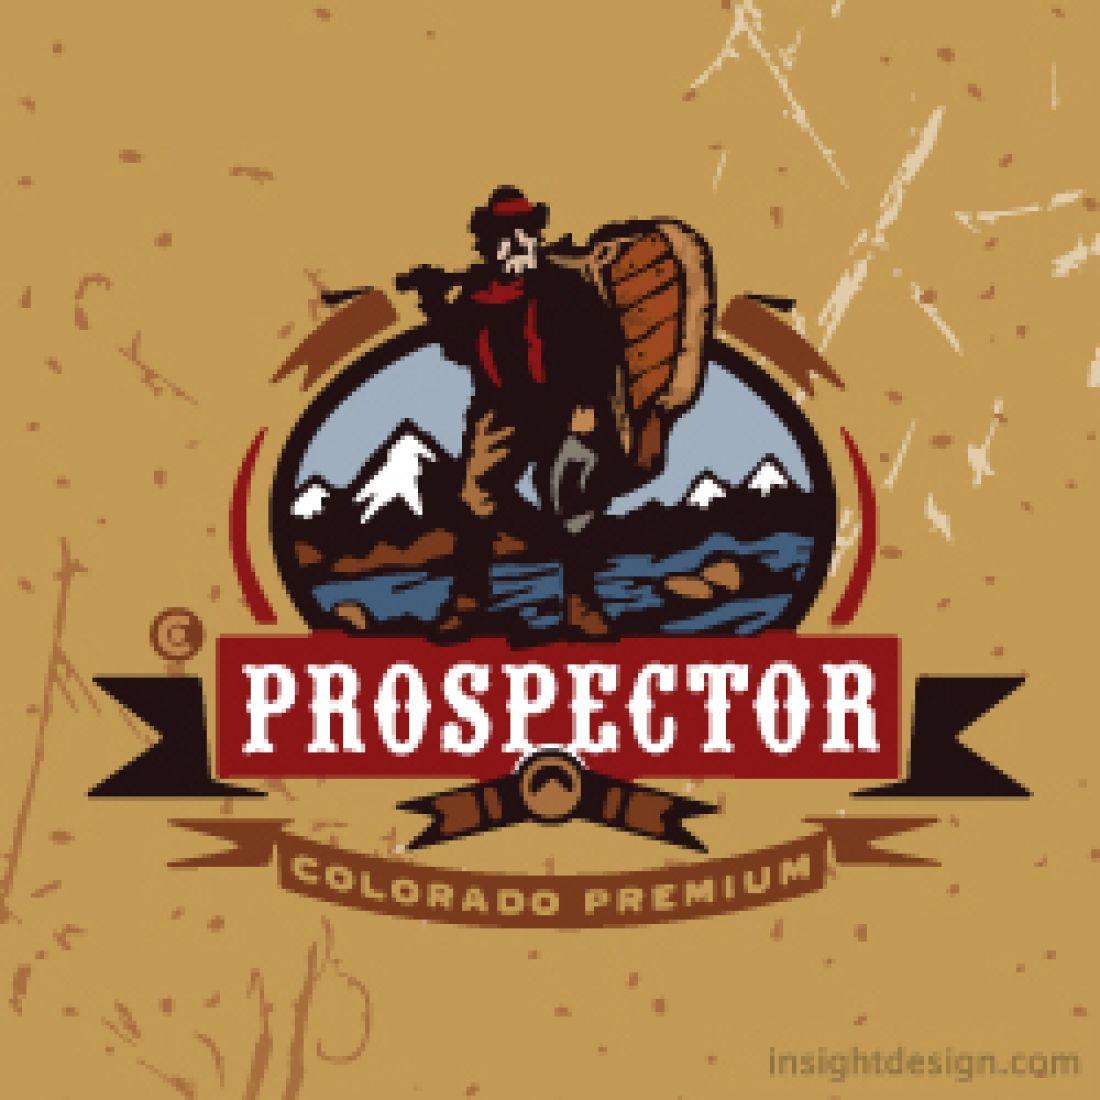 Prospector Logo - Colorado Premium Prospector logo - Insight Design